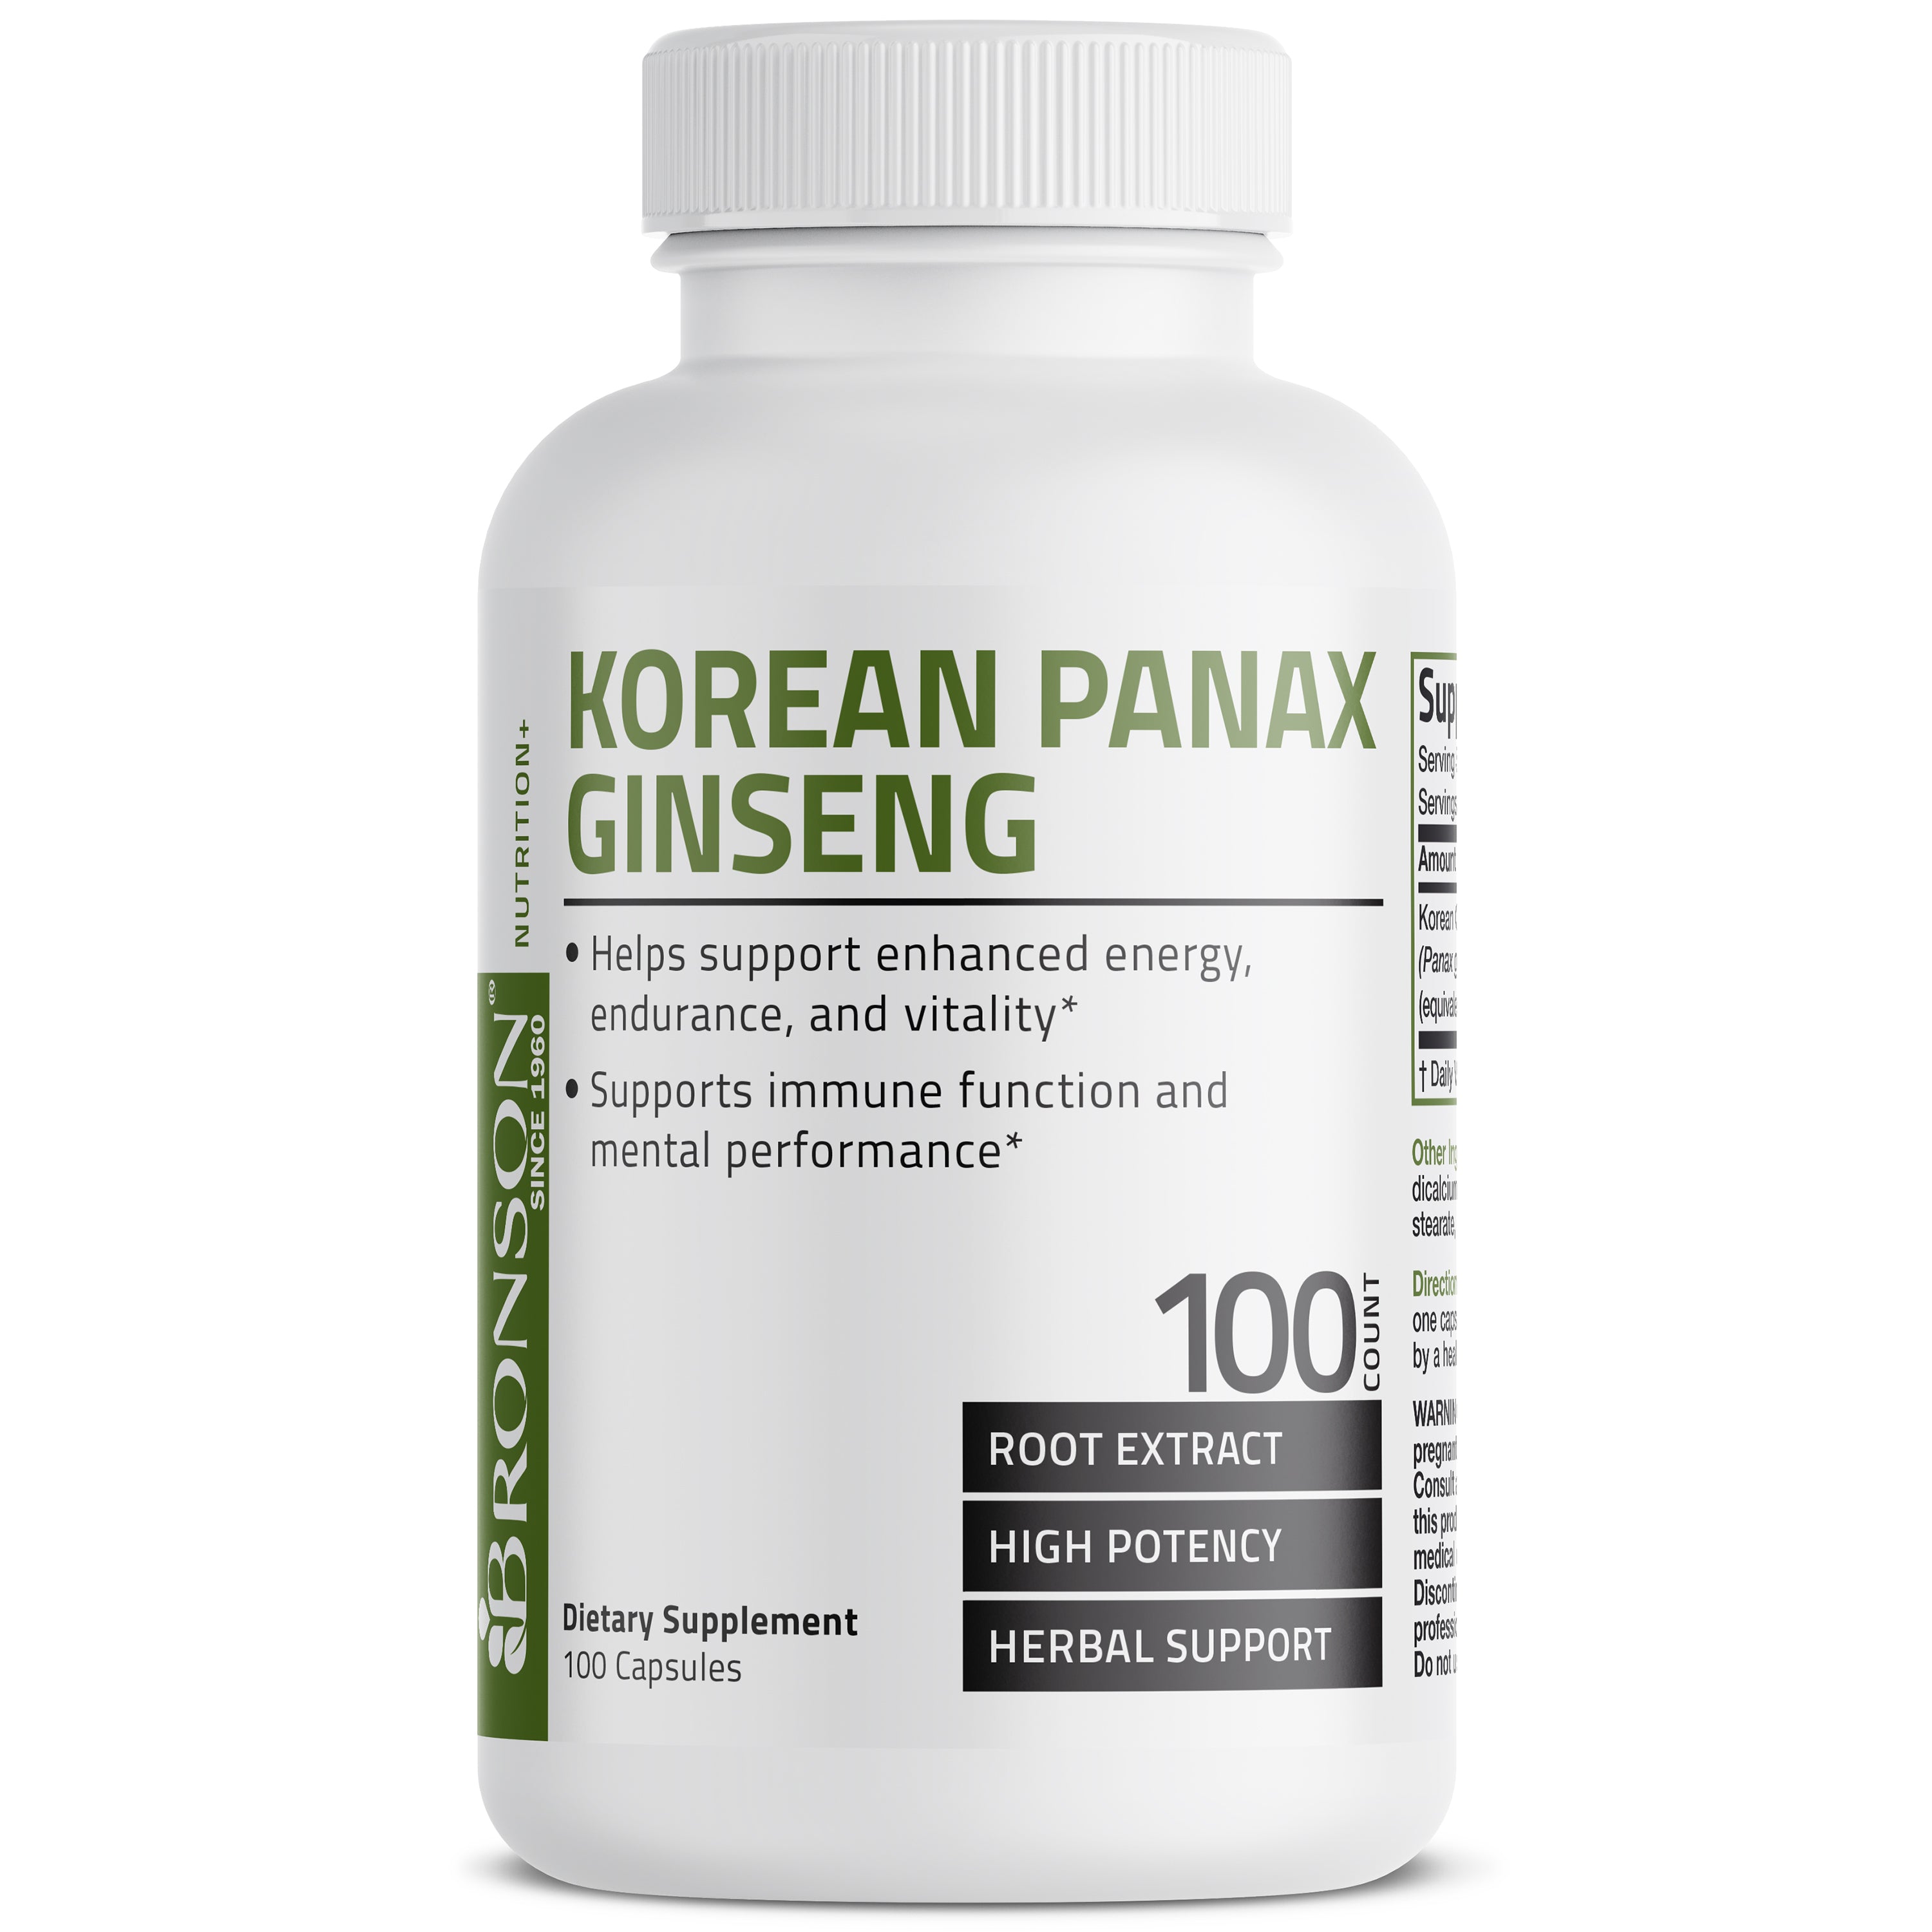 Korean Panax Ginseng Root - 500 mg, 100 Capsules view 3 of 6